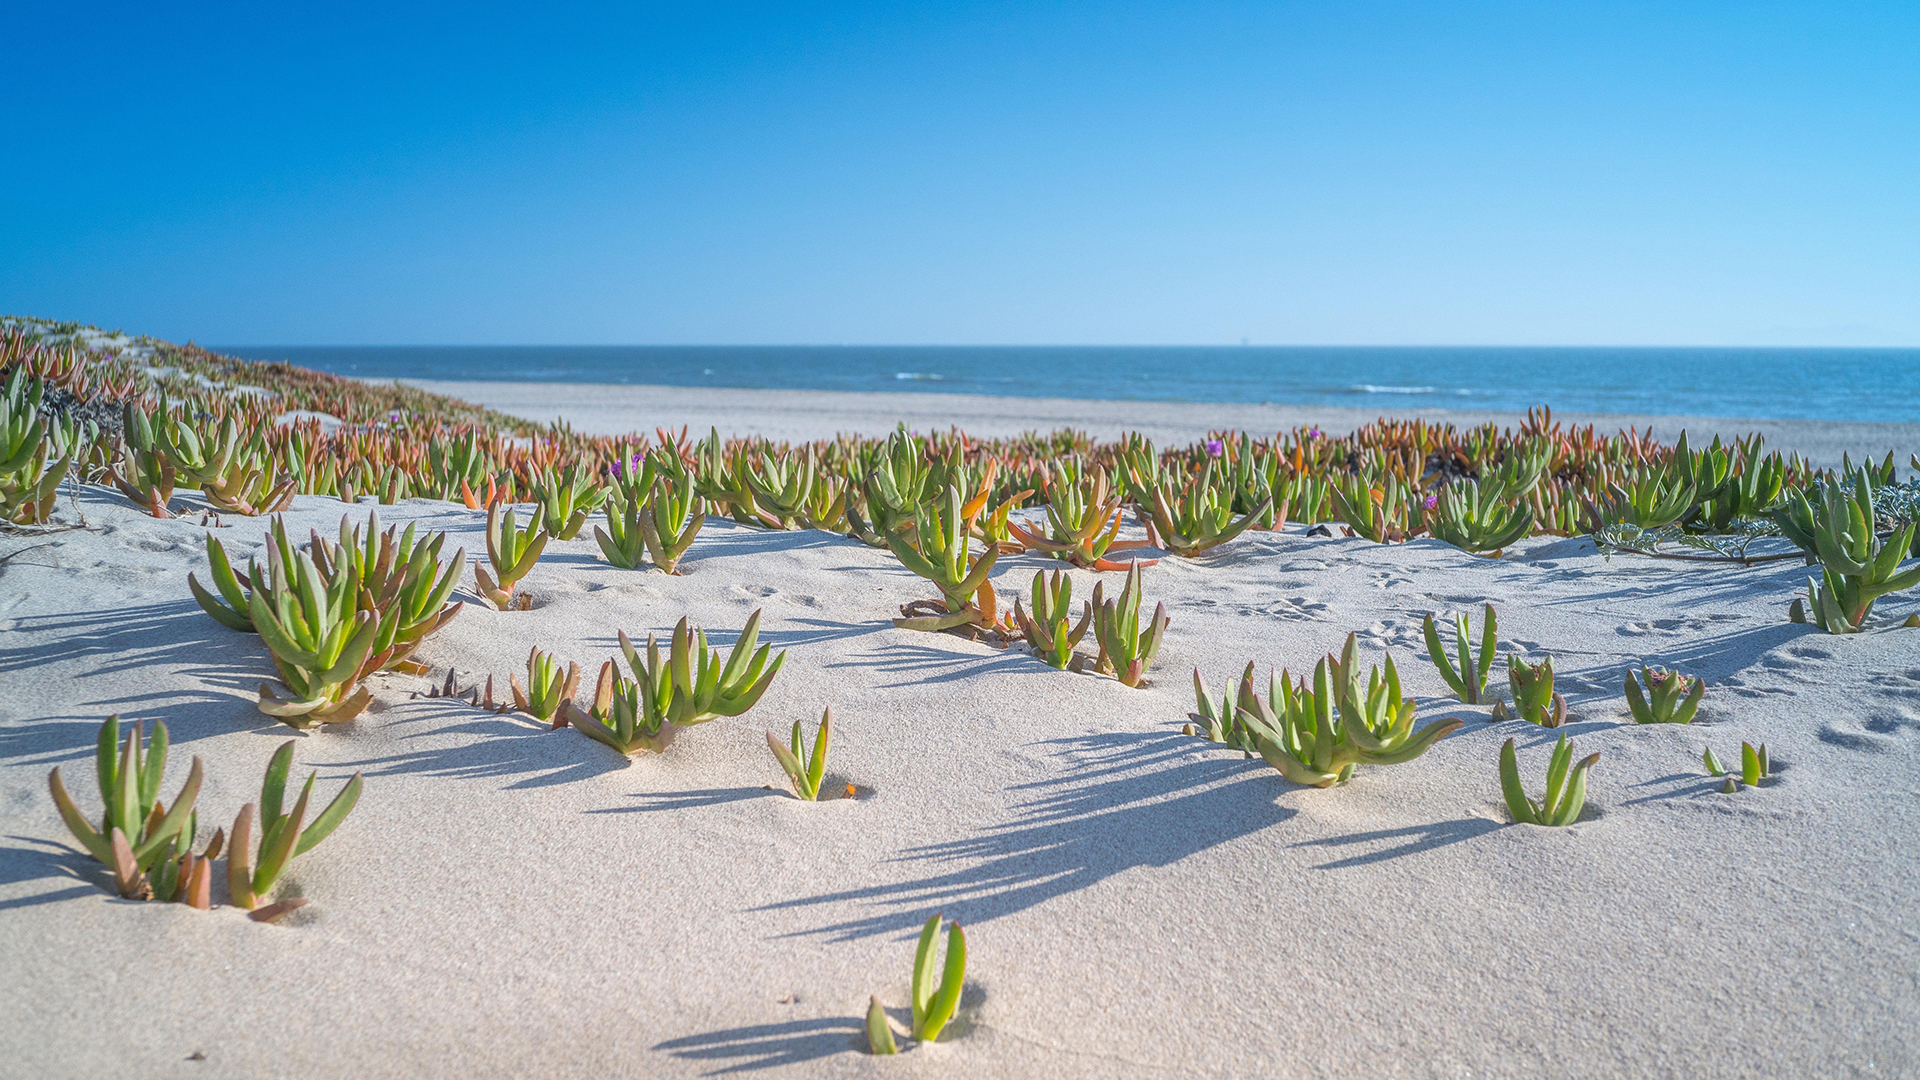 General 1920x1080 beach shore plants sand sea horizon sunlight landscape